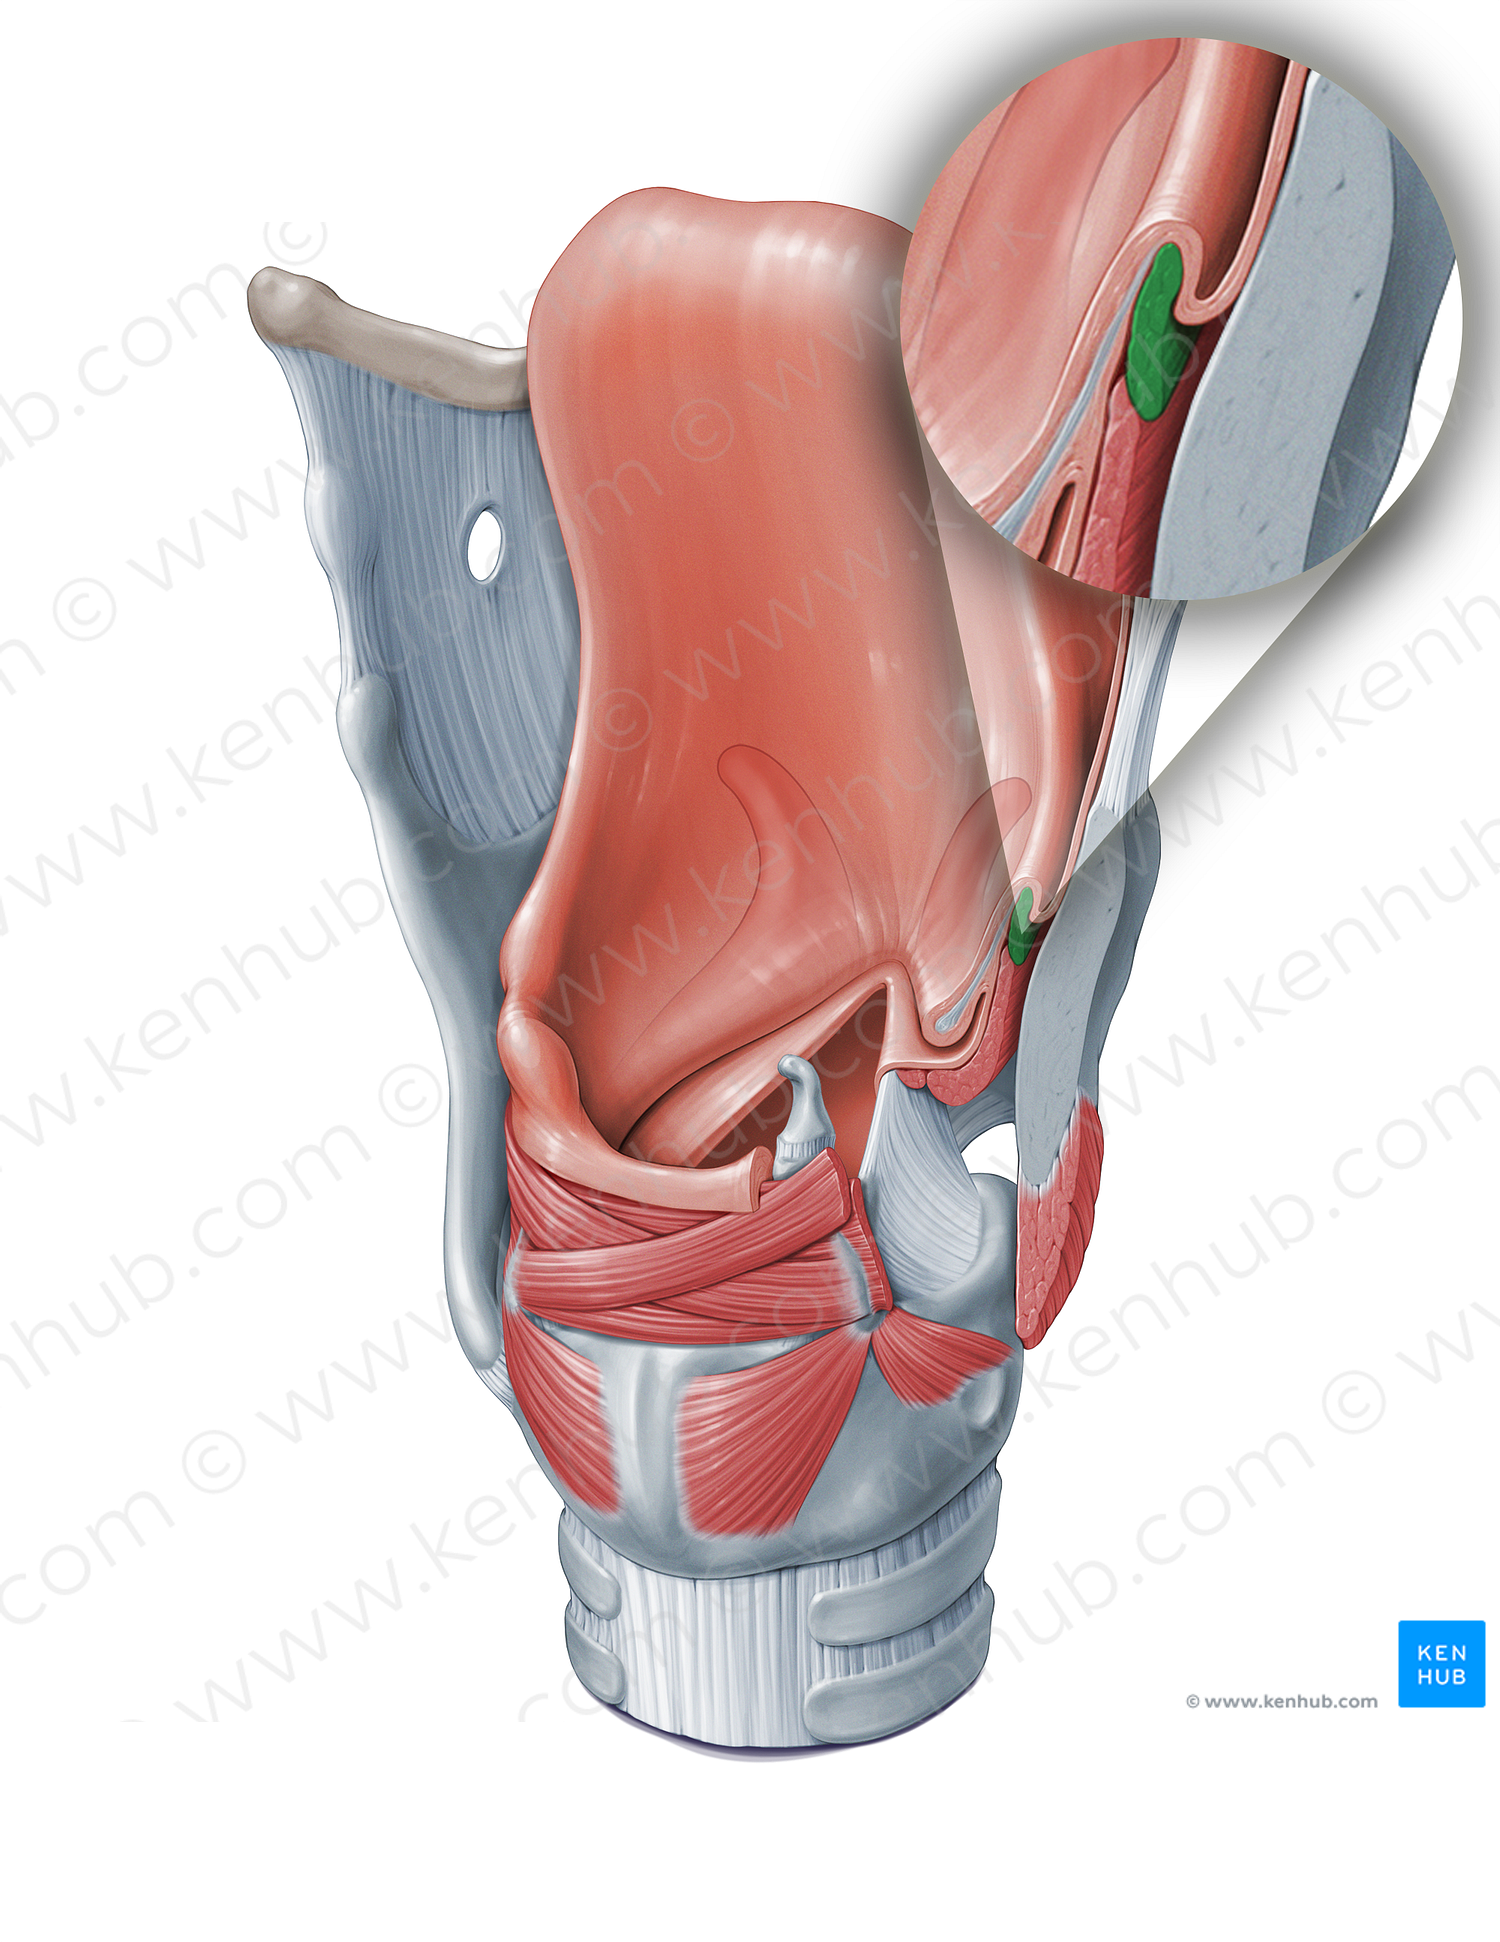 Aryepiglottic muscle (#18347)